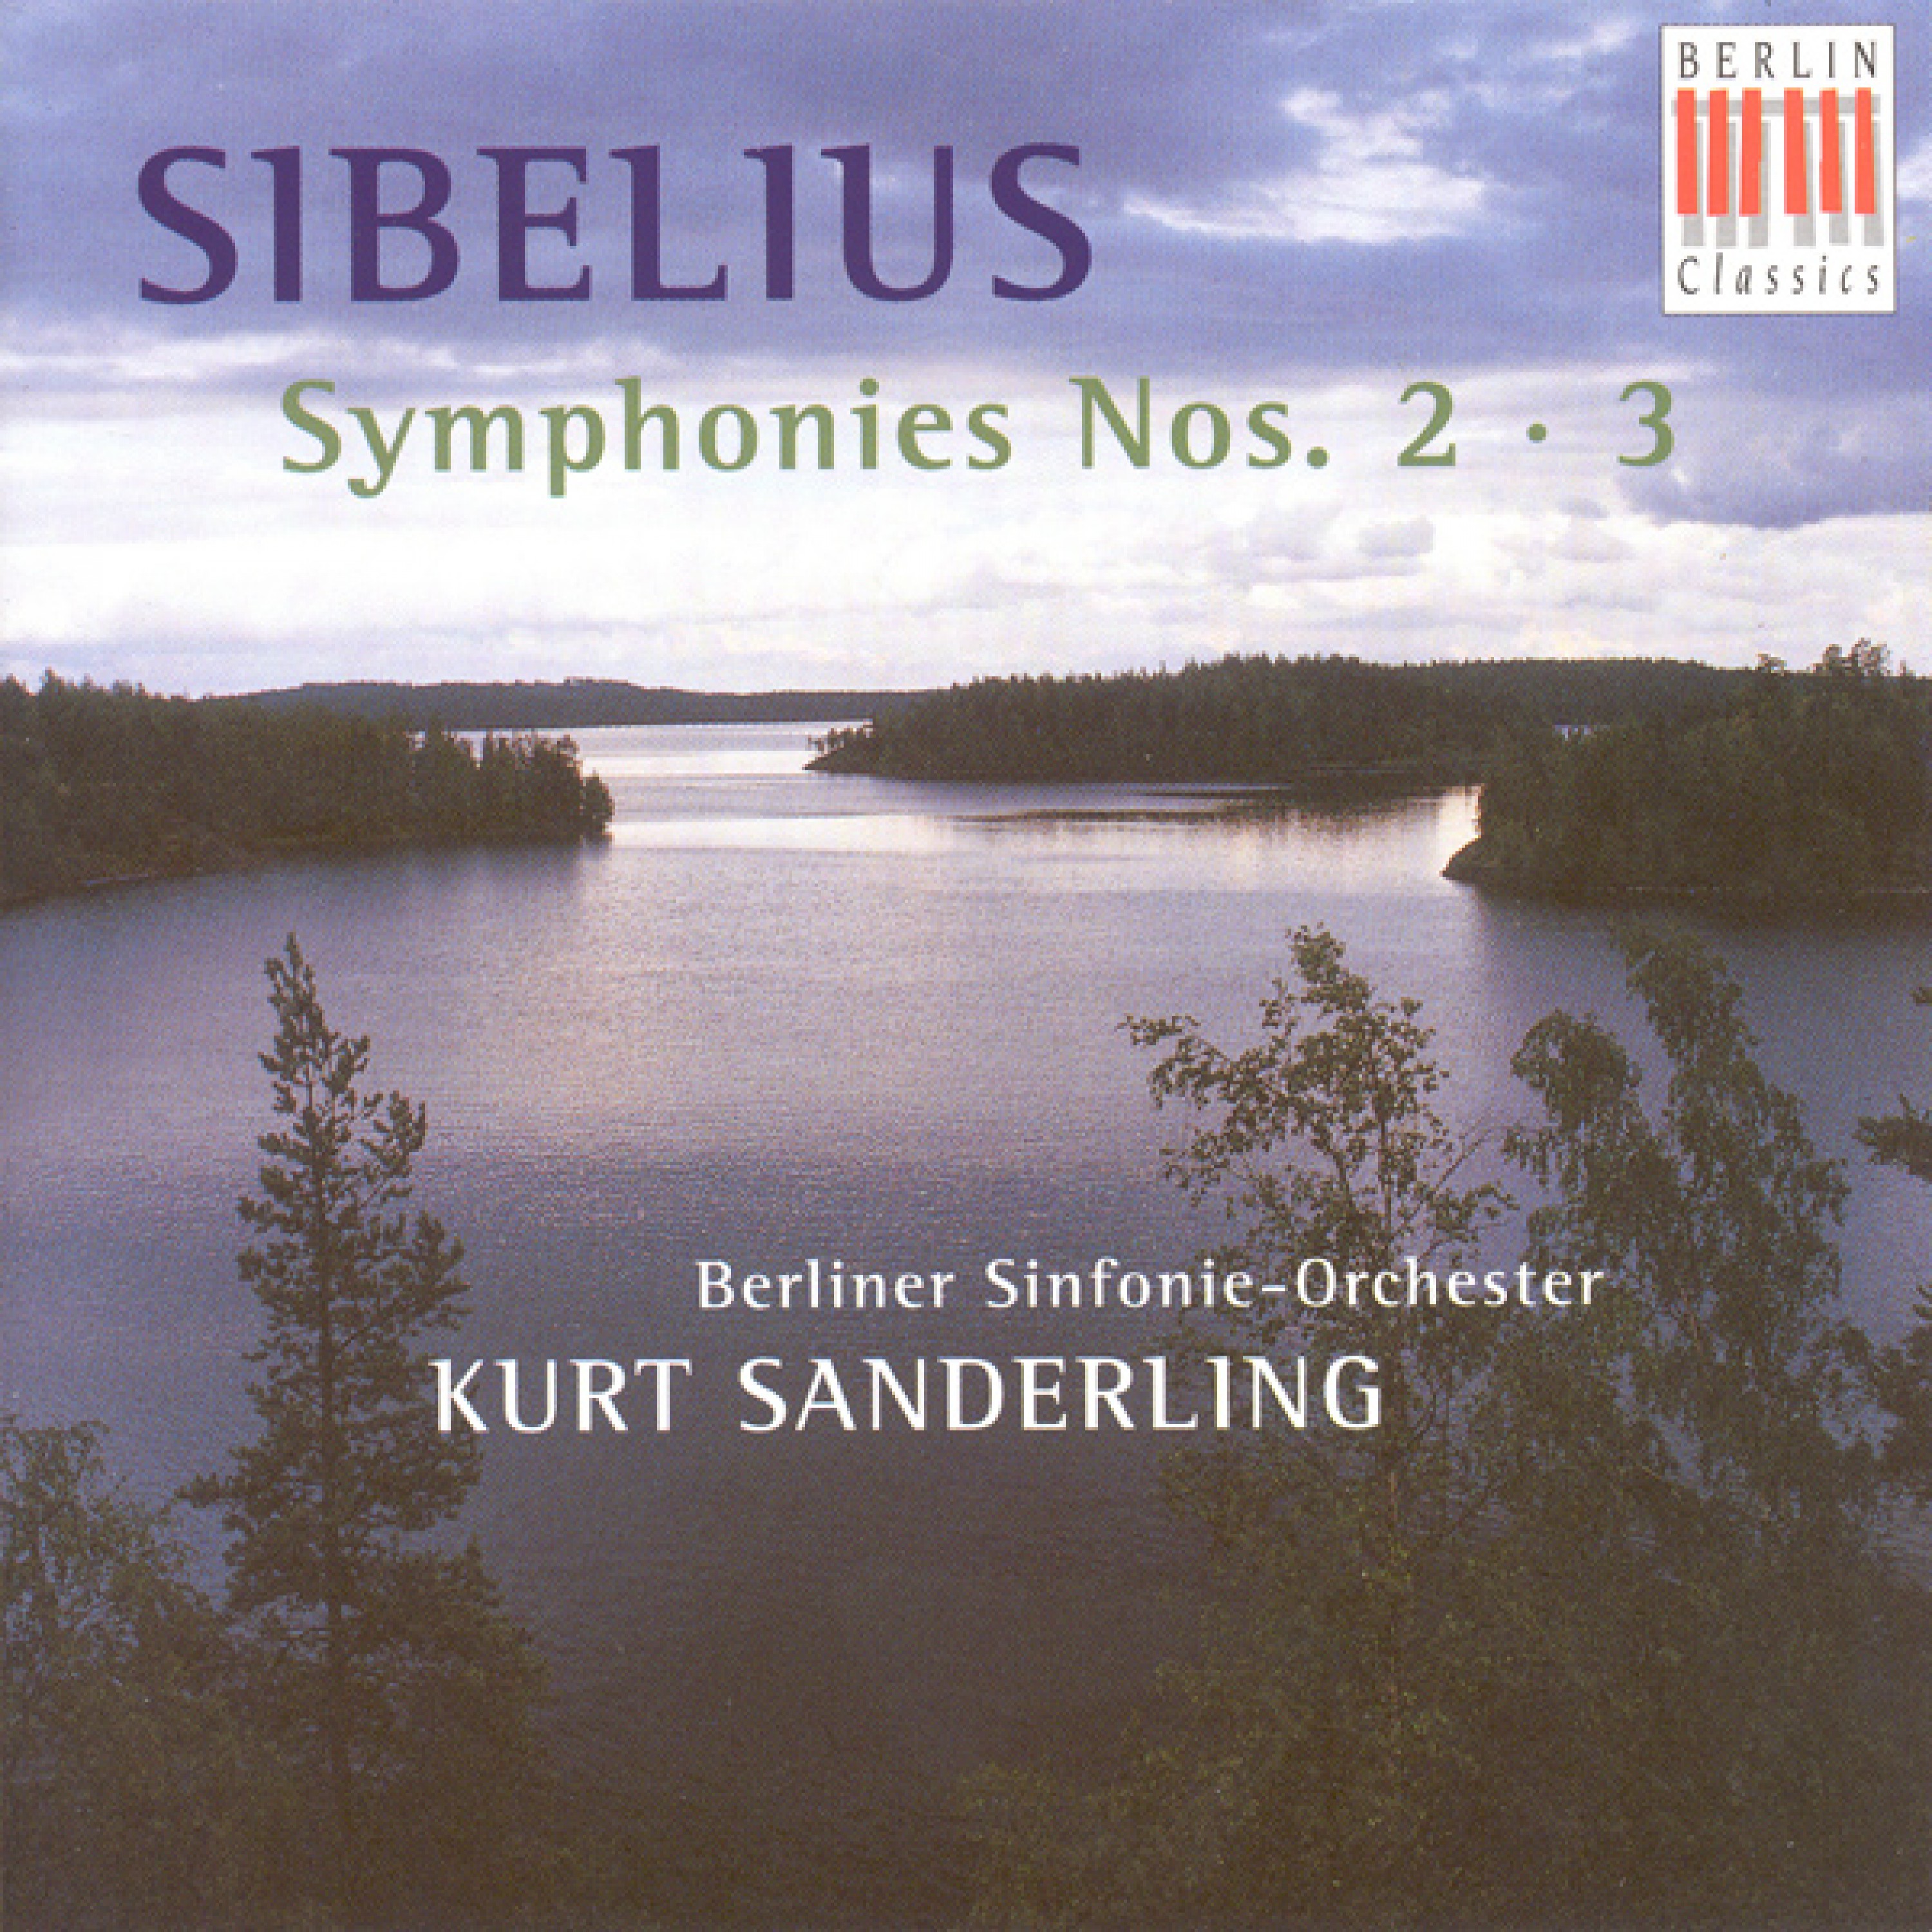 Sibelius: Symphonies Nos. 2 and 3